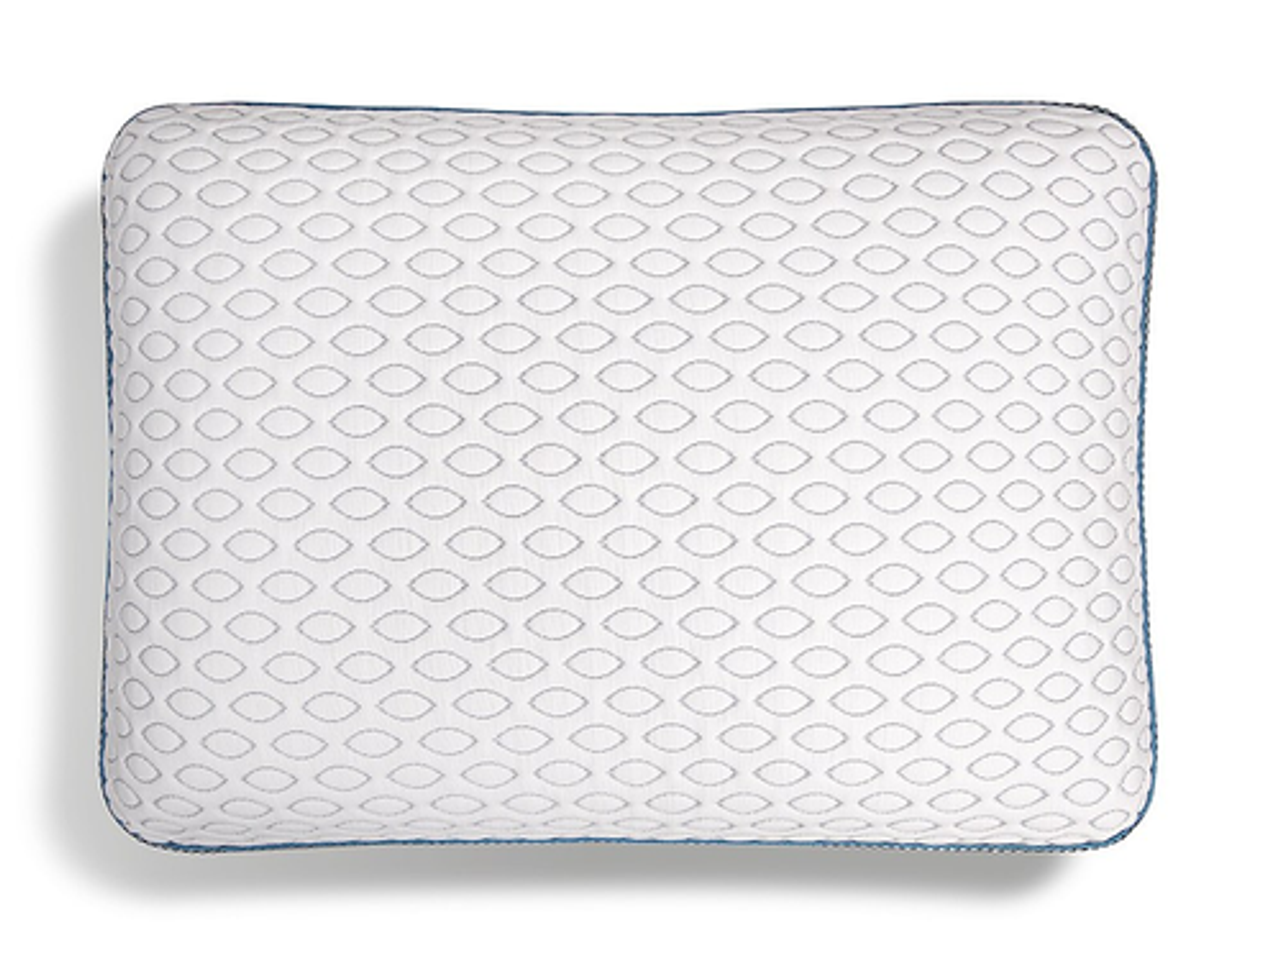 Bedgear - Frost King Pillow 1.0 - White